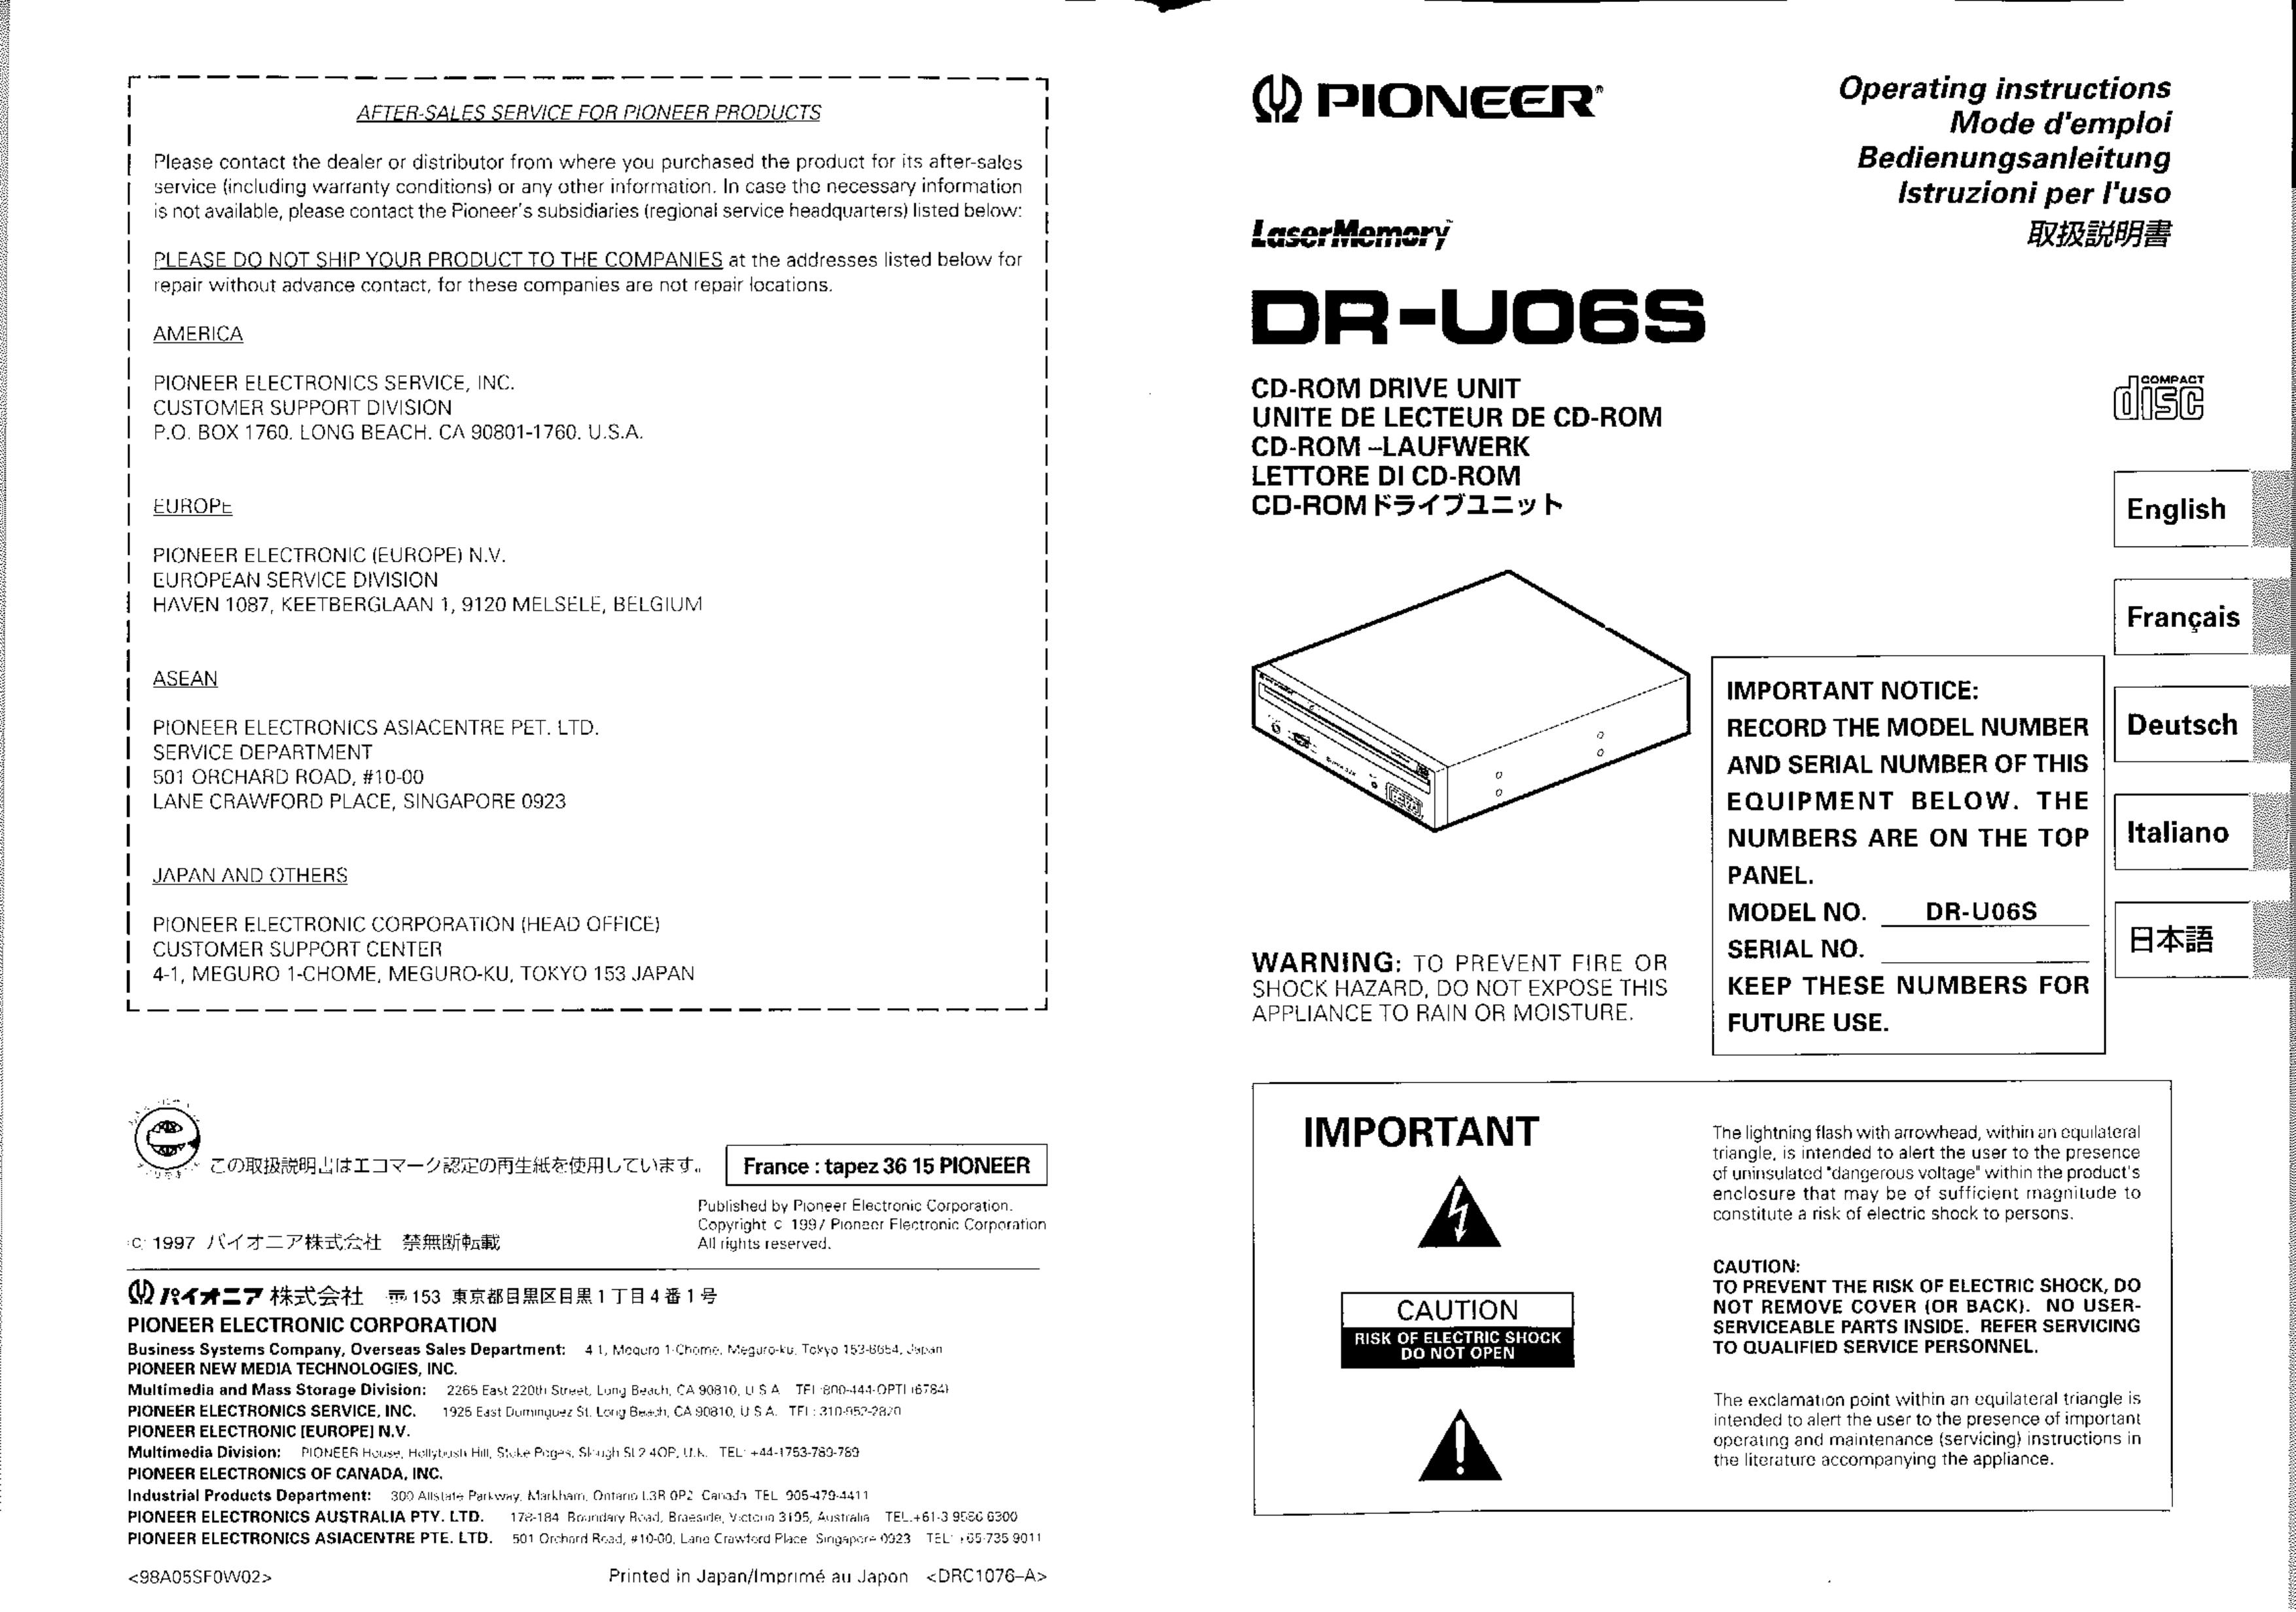 Pioneer DR-U06S Digital Camera User Manual